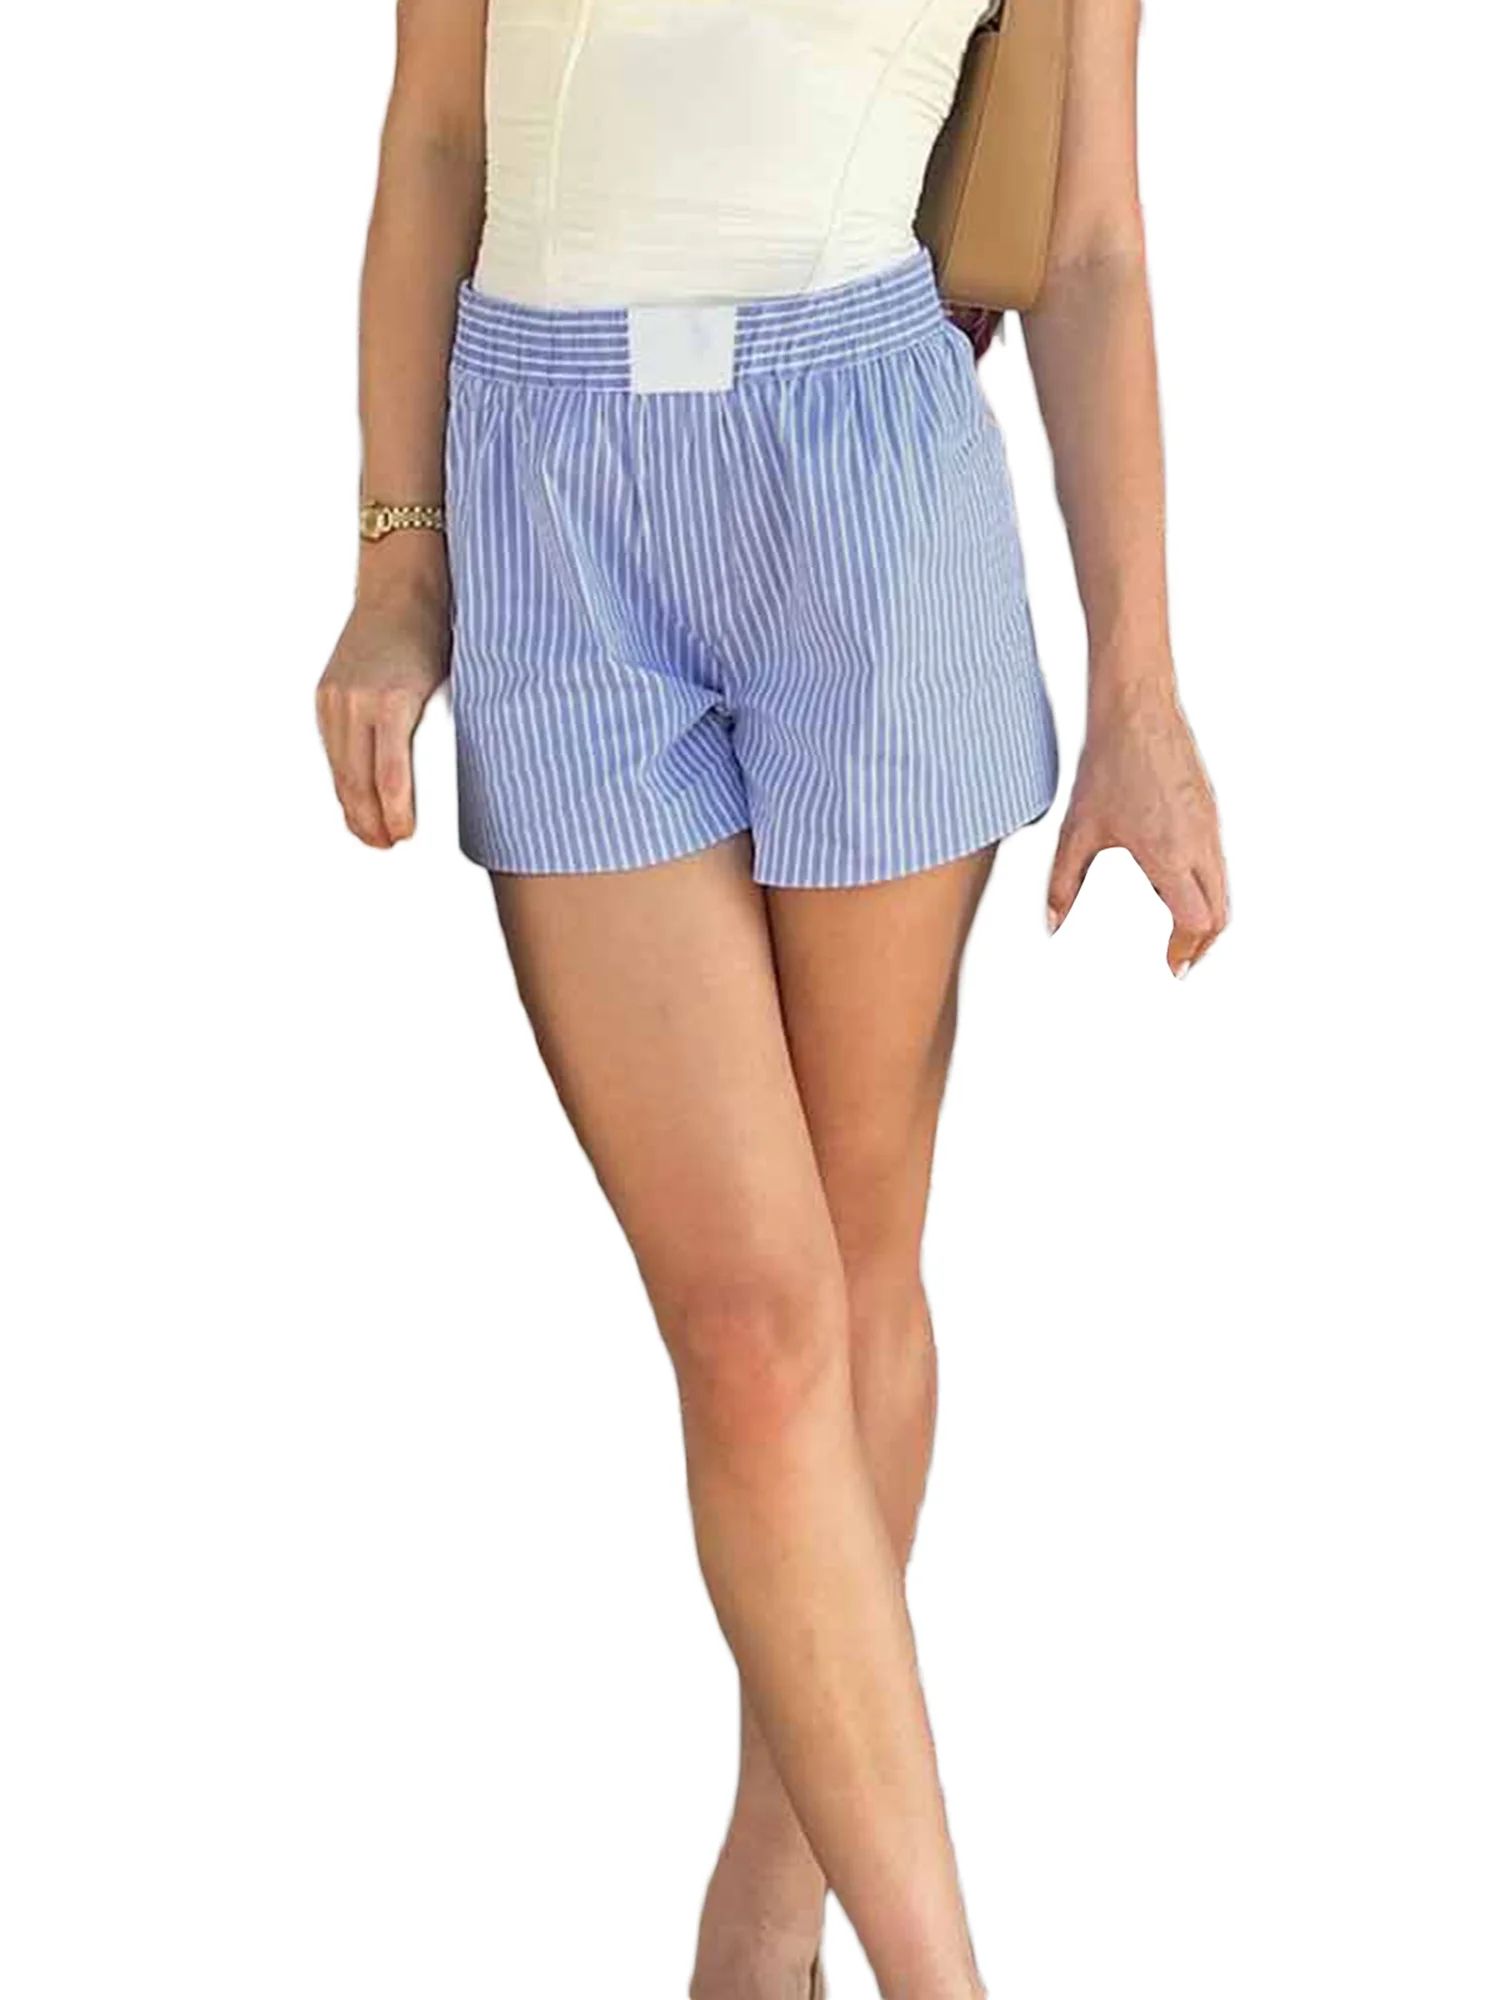 ZAXARRA Women Striped Shorts, Elastic Waist Summer Casual Shorts Streetwear for Daily Date | Walmart (US)